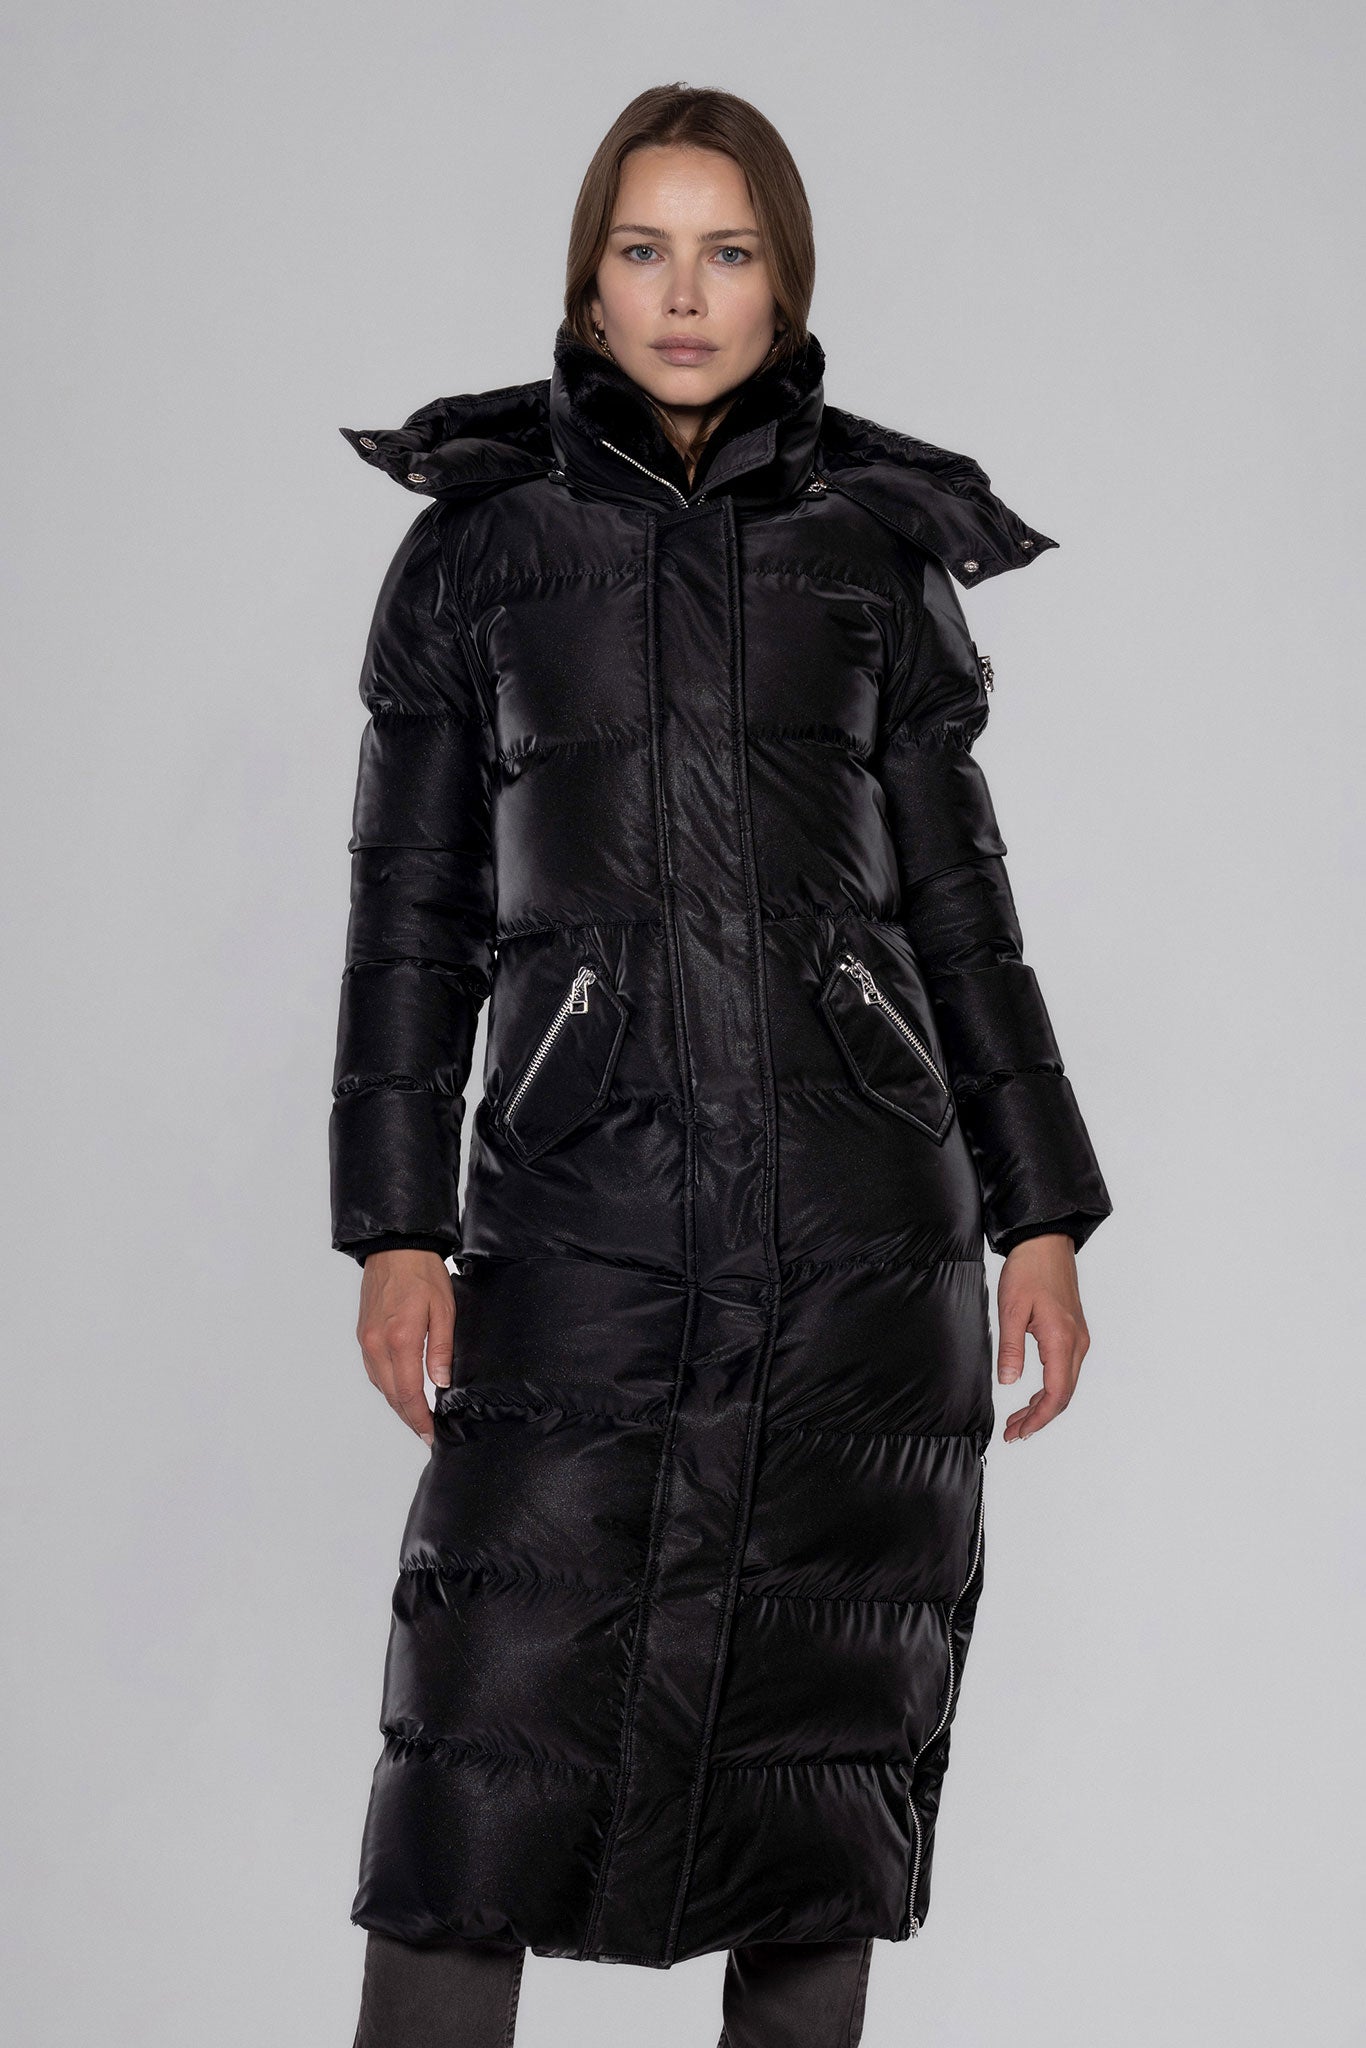 Woodpecker Women's Extra Long Bird of Paradise Winter coat. High-end Canadian designer winter coat for women in “Black Diamond